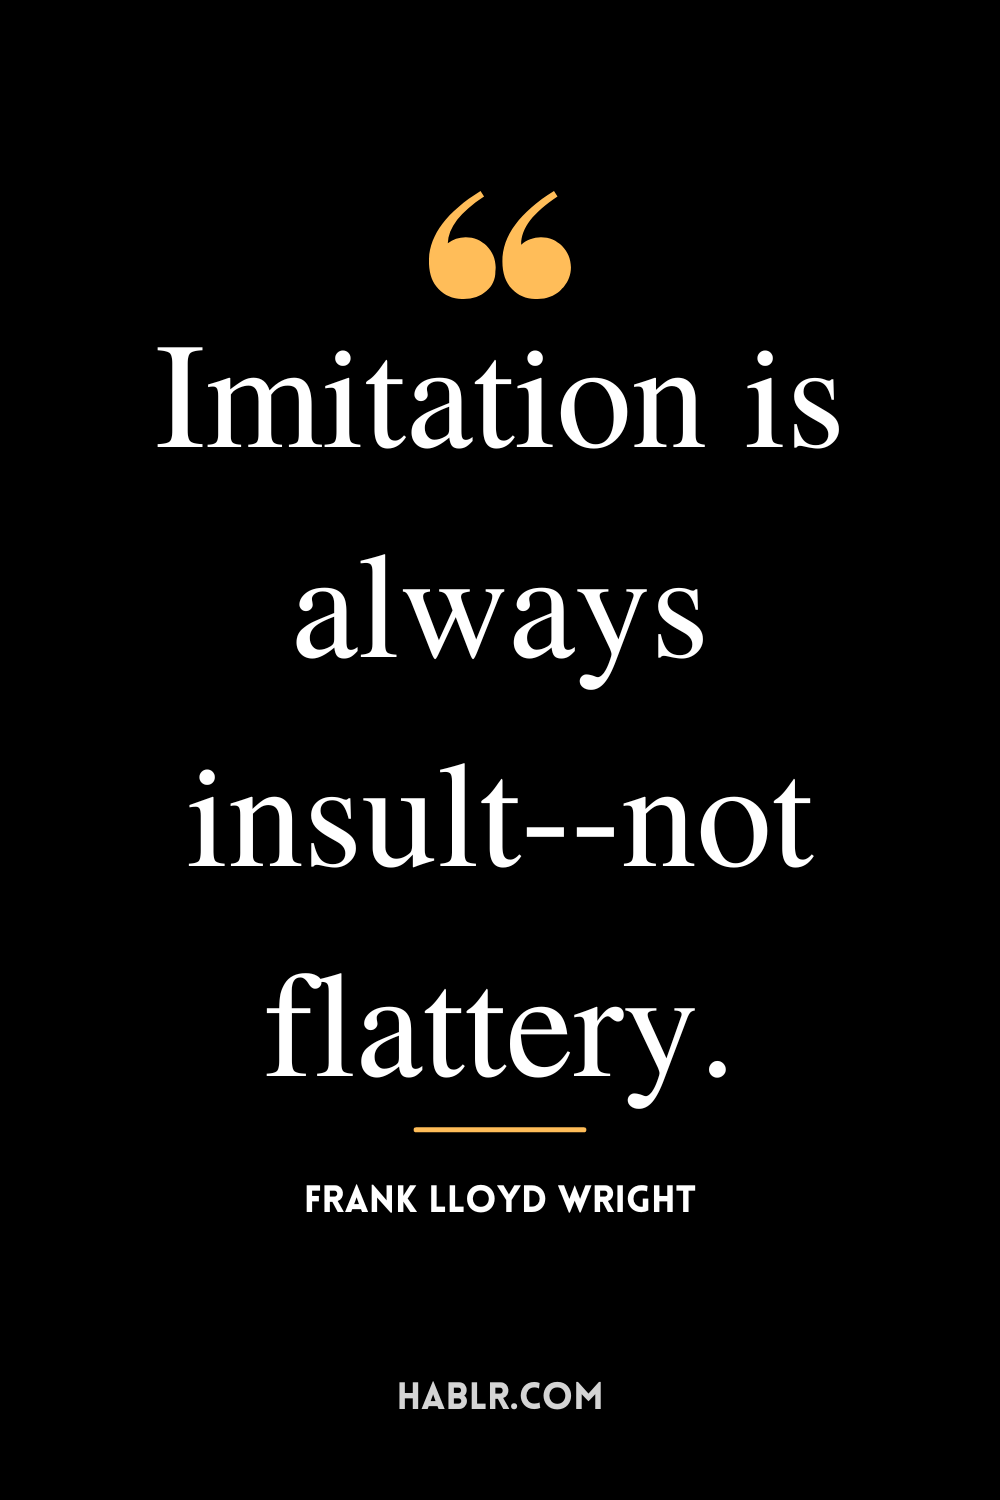 "Imitation is always insult--not flattery." -Frank Lloyd Wright